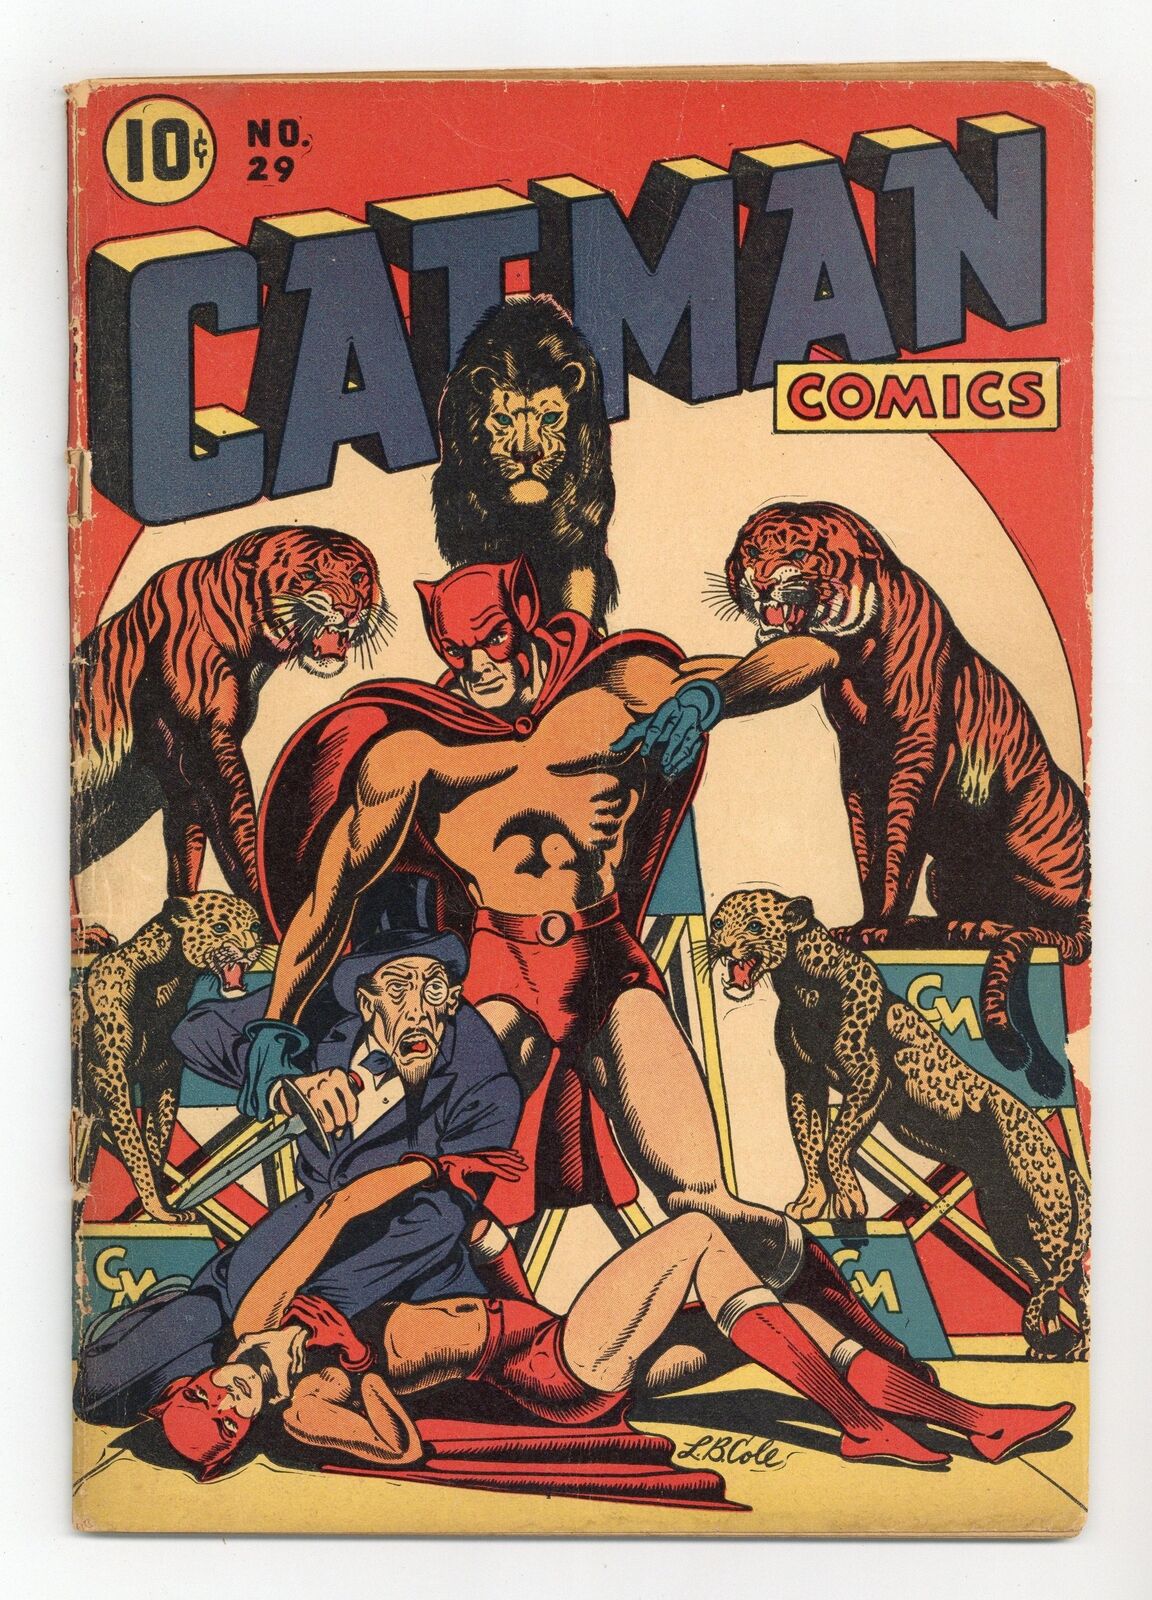 Catman Comics #29 GD- 1.8 1945